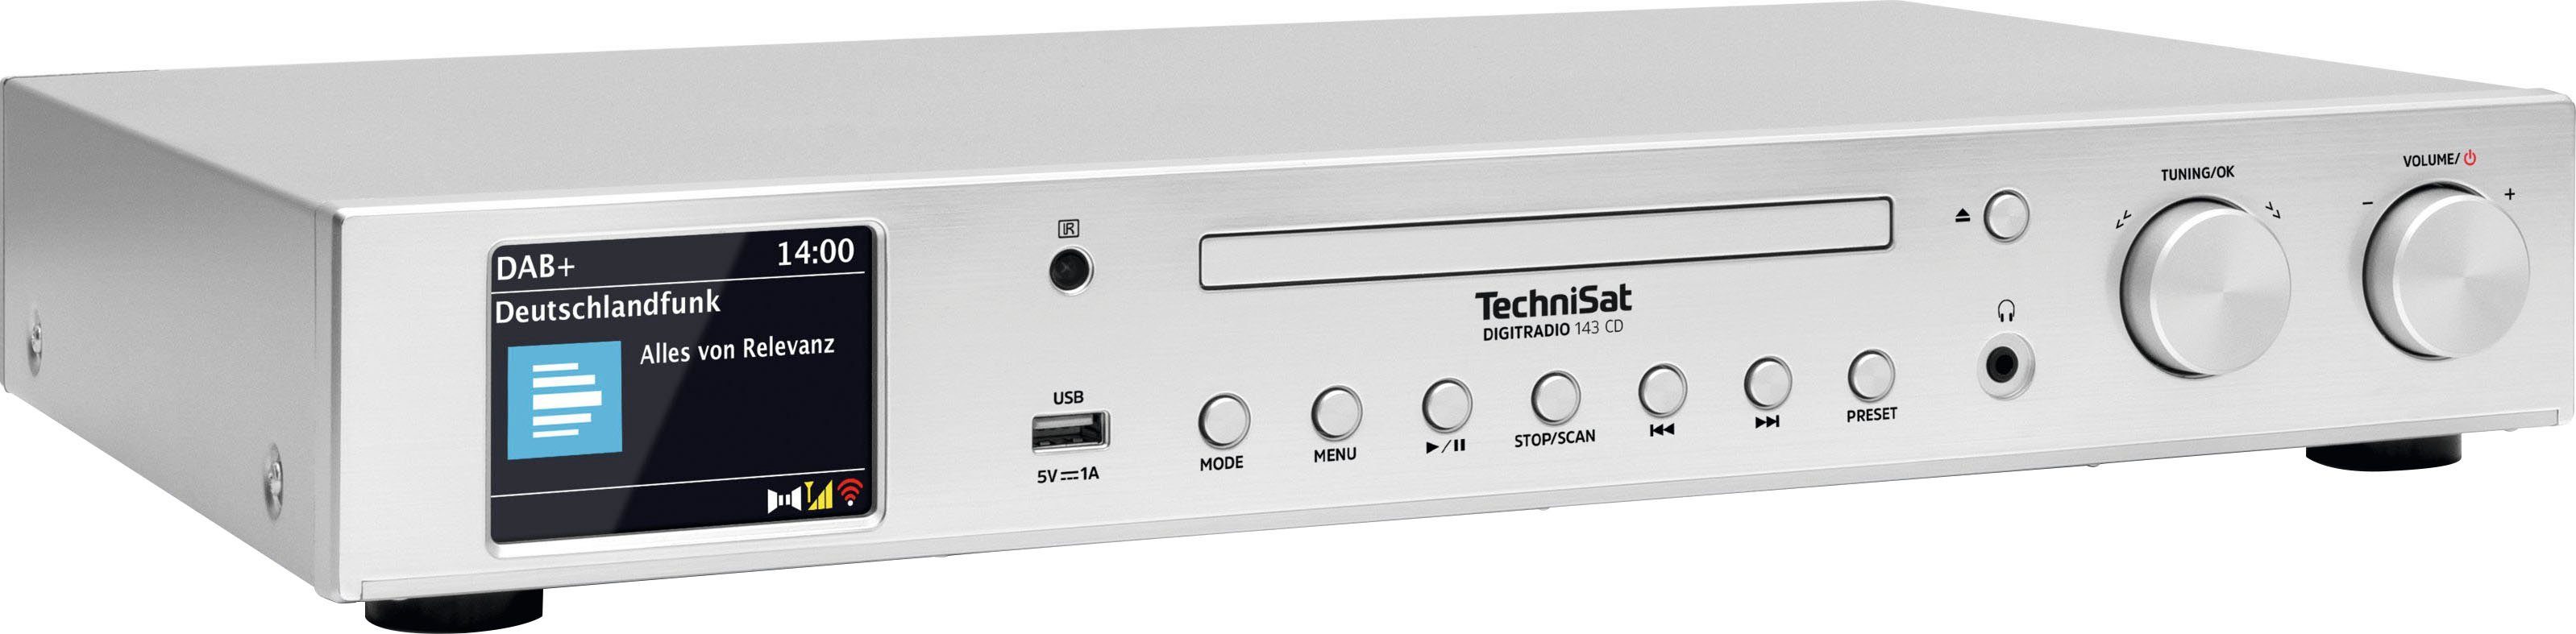 TechniSat DIGITRADIO (V3) (Digitalradio Internetradio, CD Digitalradio (DAB) (DAB), mit 143 UKW RDS) silber